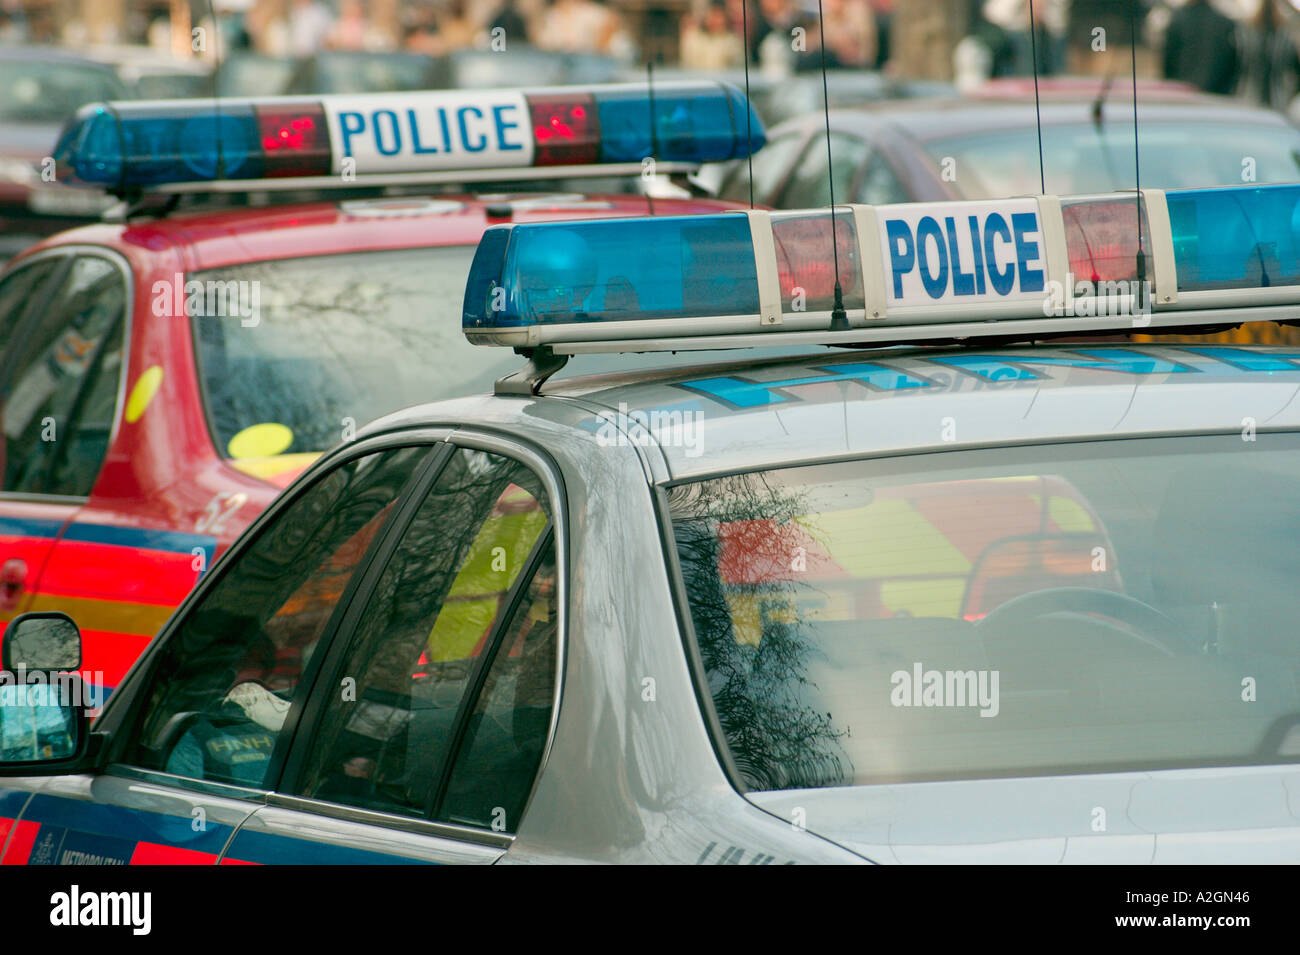 Police car van emergency services response unit in London England UK United Kingdom Great Britain Stock Photo